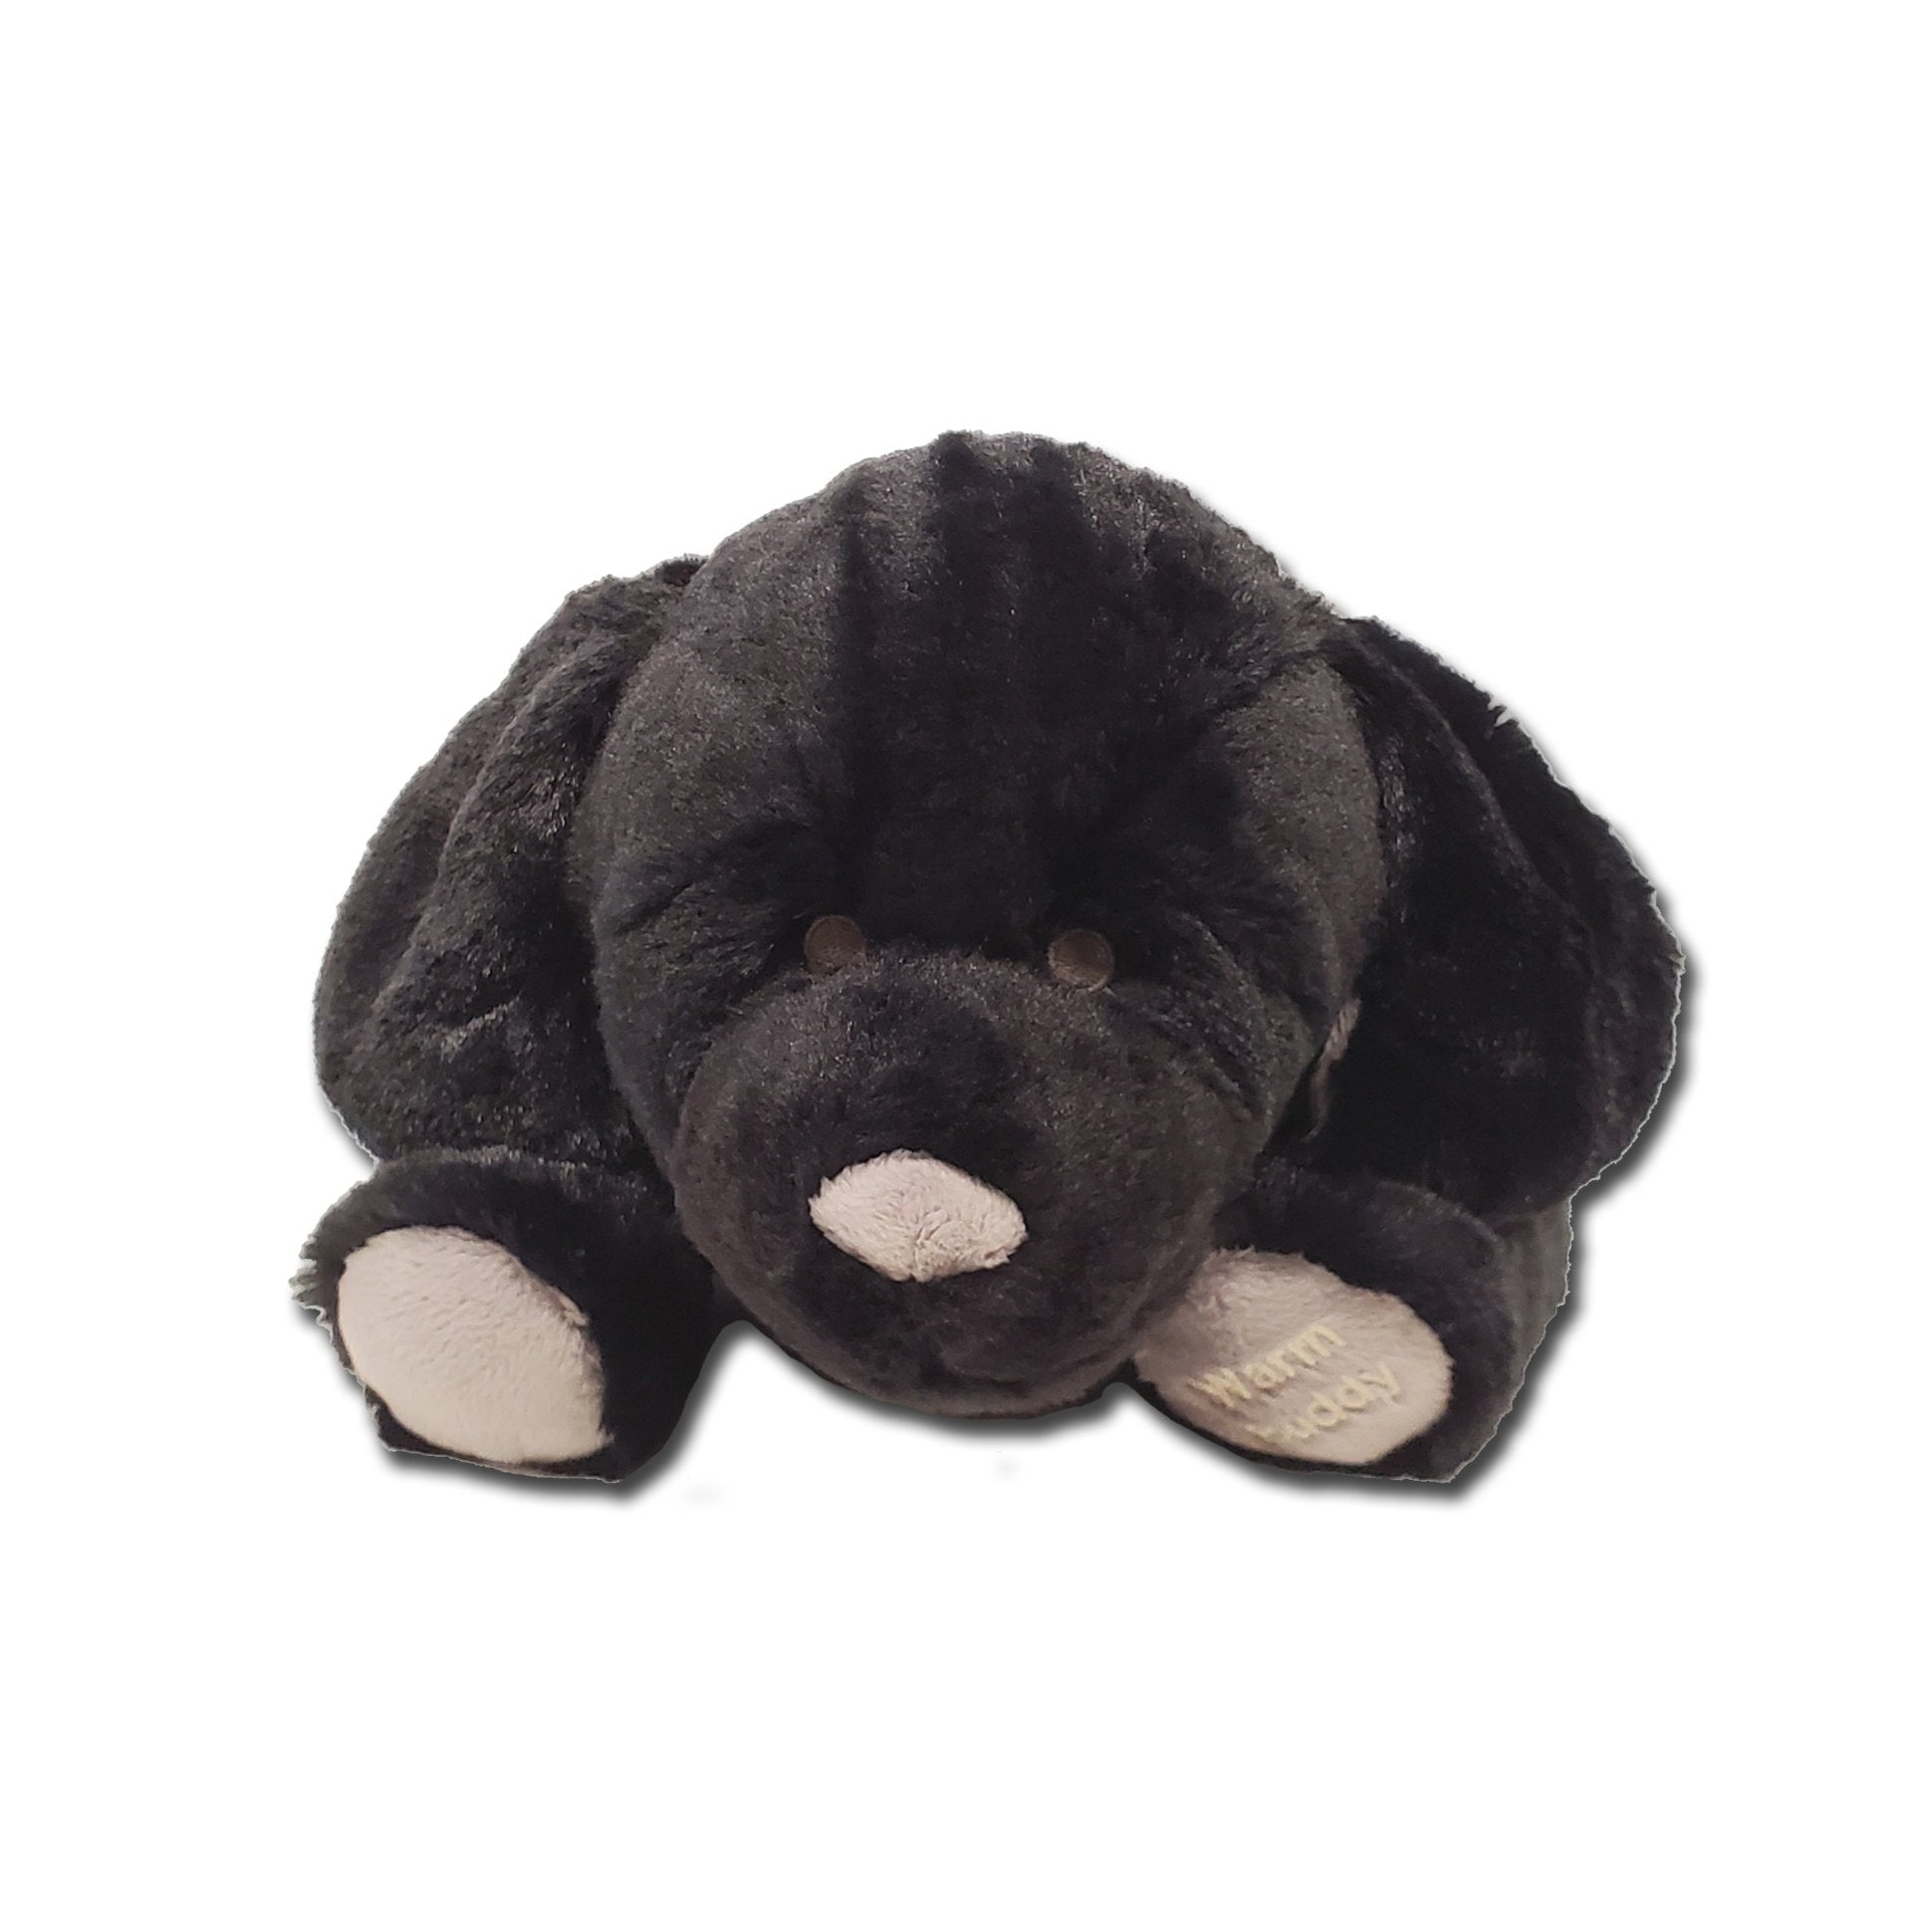 Cuddle Buddy Lab - Black - Heated Stuffed Animal